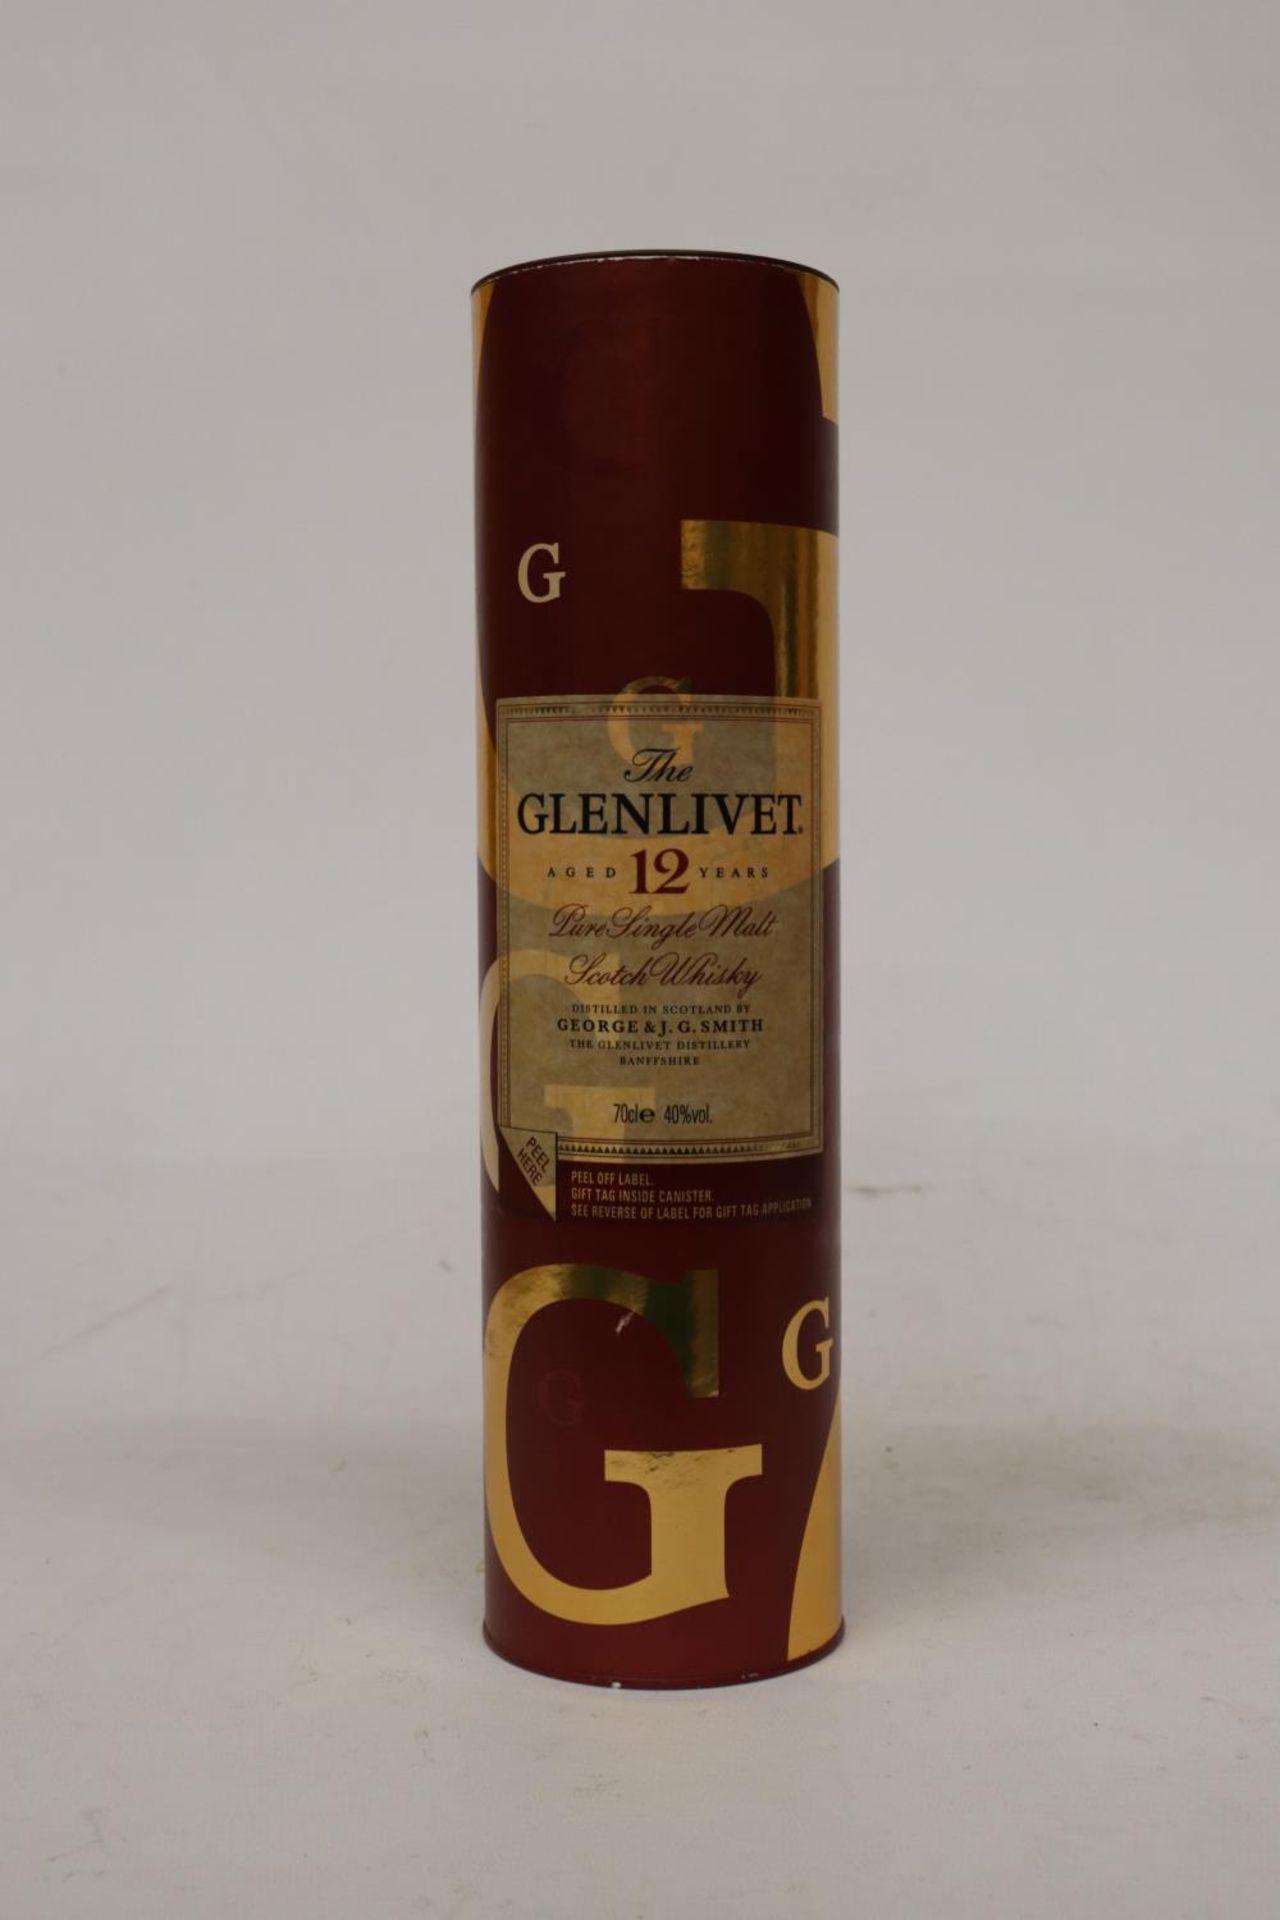 A BOTTLE OF THE GLENLIVIT 12 YEAR MALT WHISKY, BOXED - Image 2 of 4